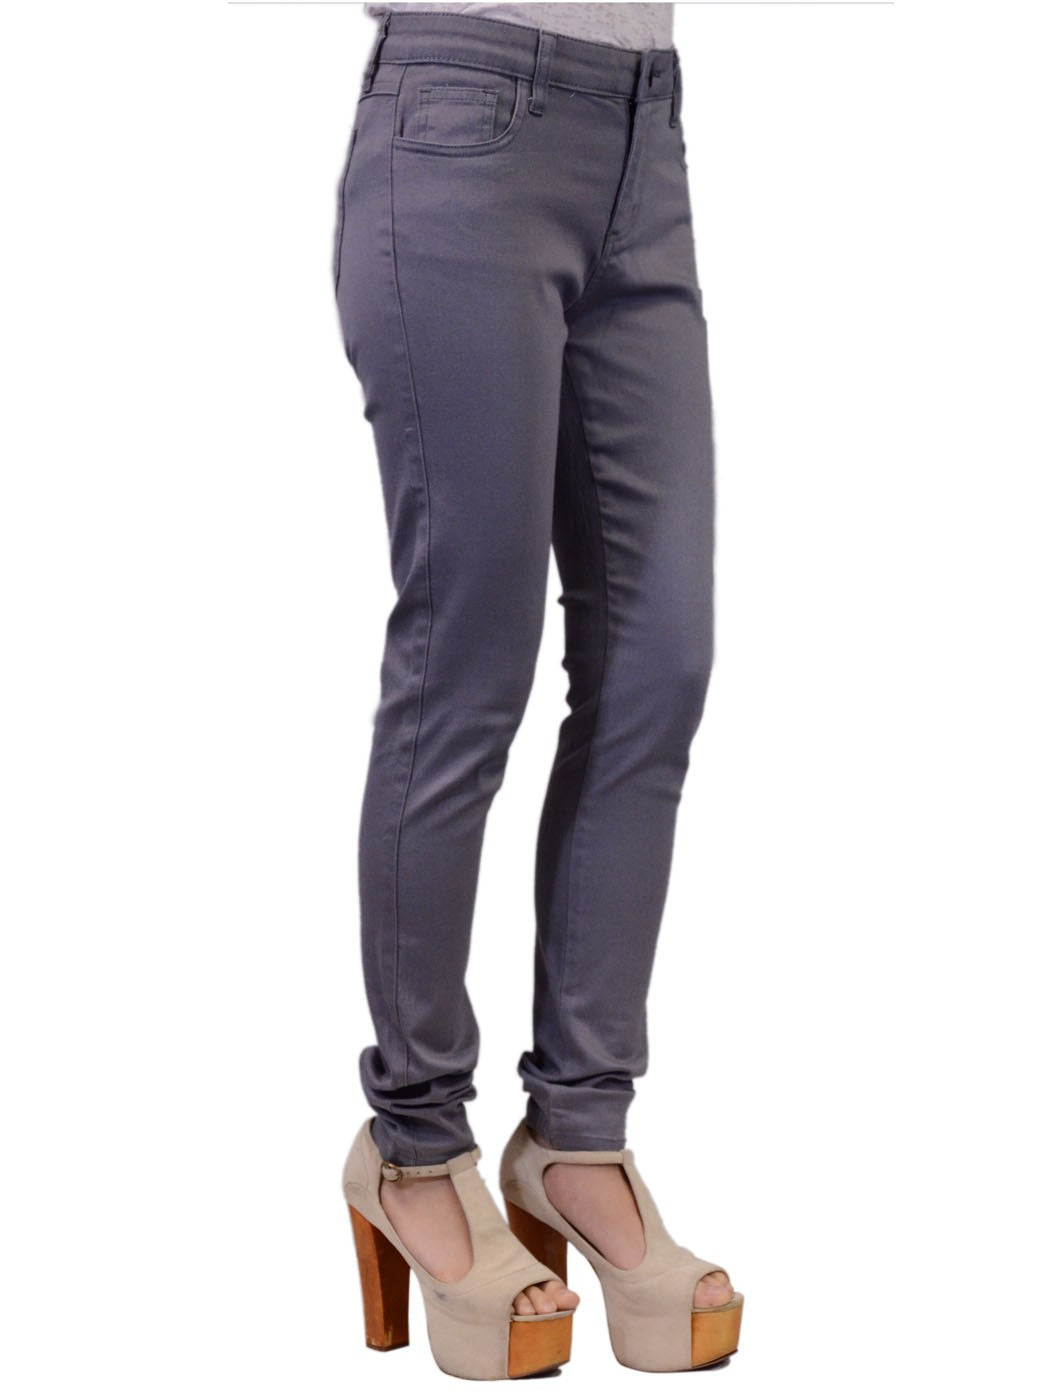 Uniq Urban Trendy Fitted Five Pocket Grey Skinny Jean Casual Pants